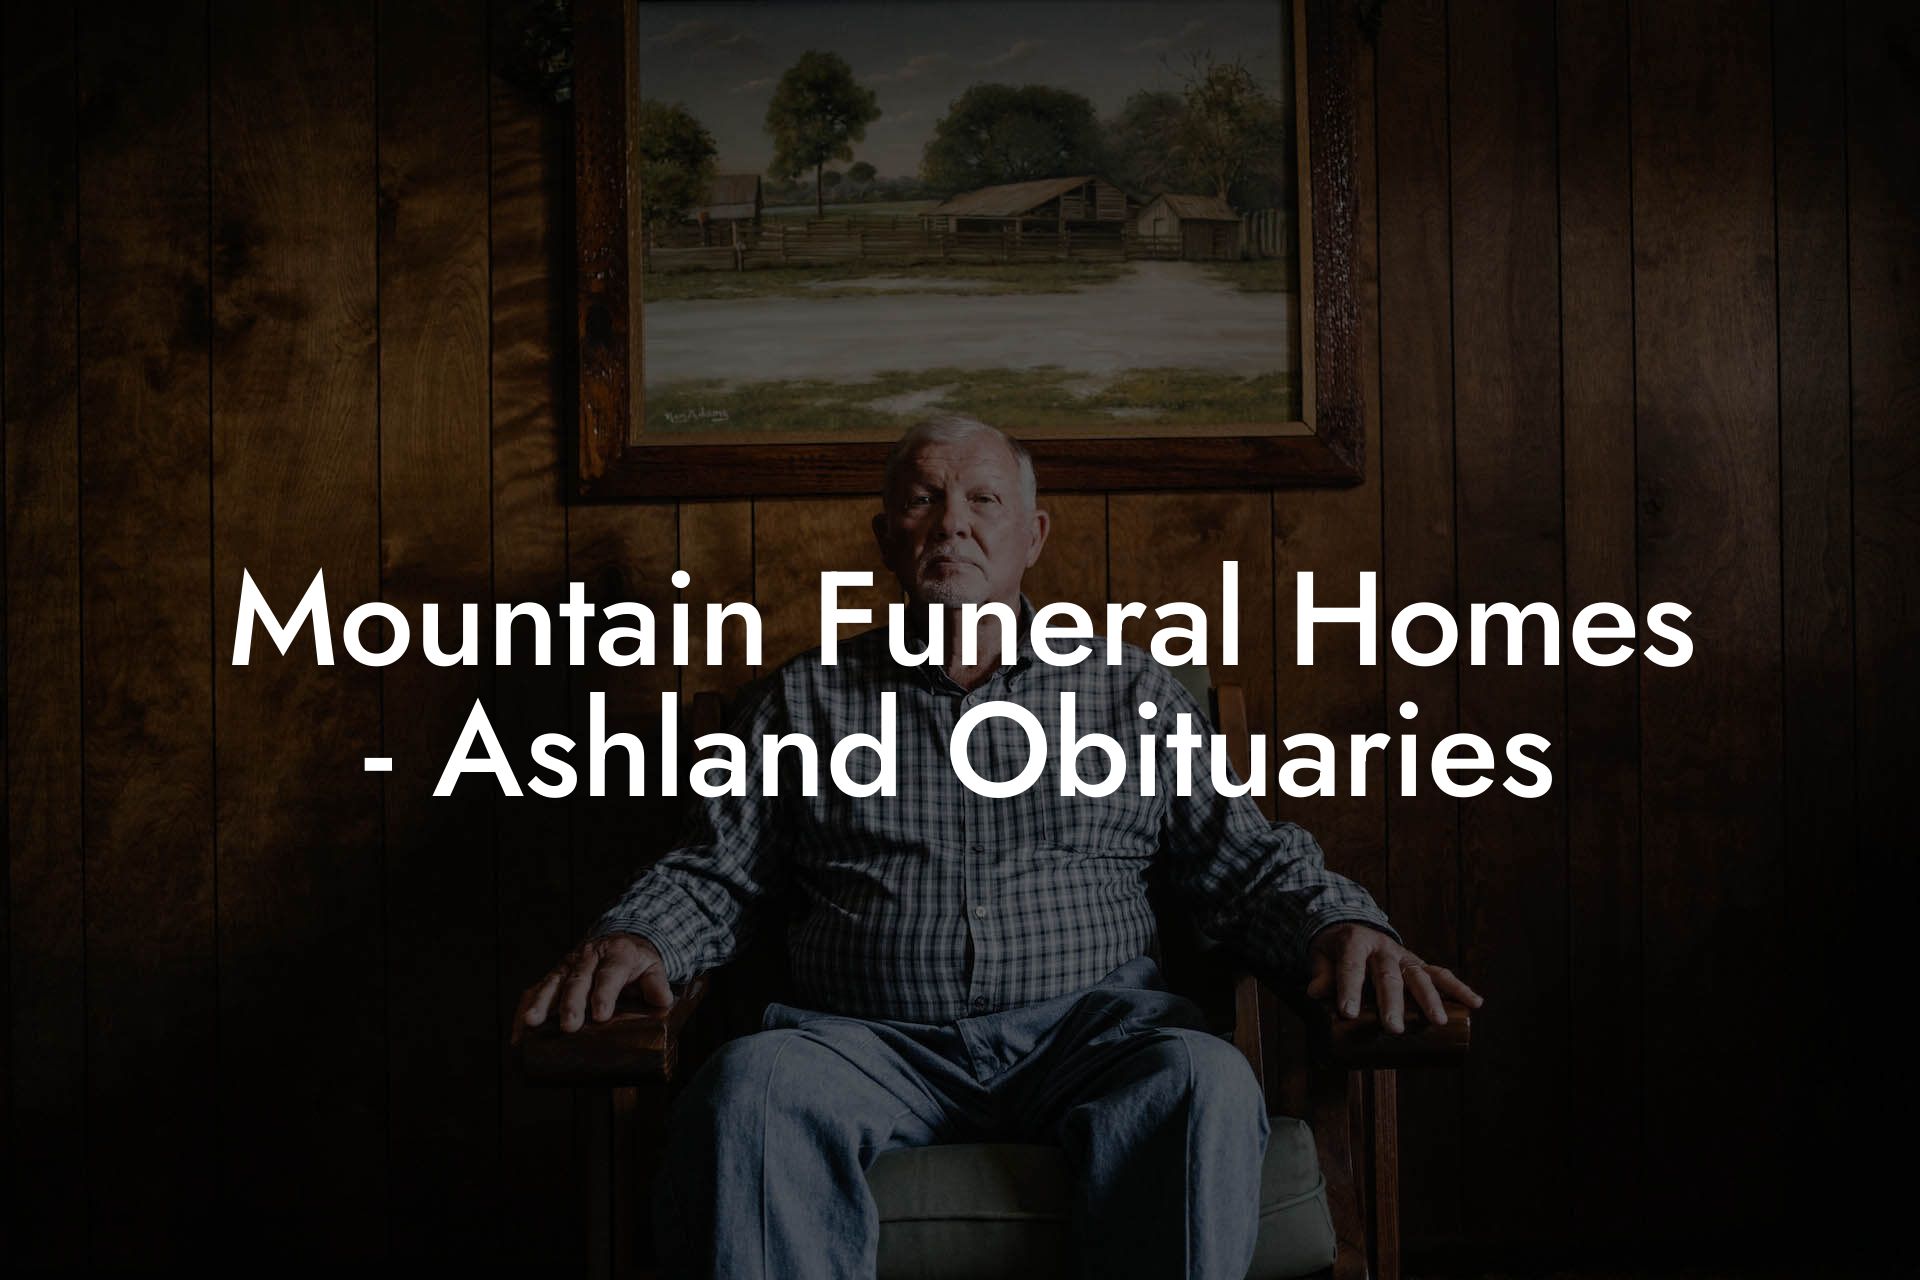 Mountain Funeral Homes - Ashland Obituaries